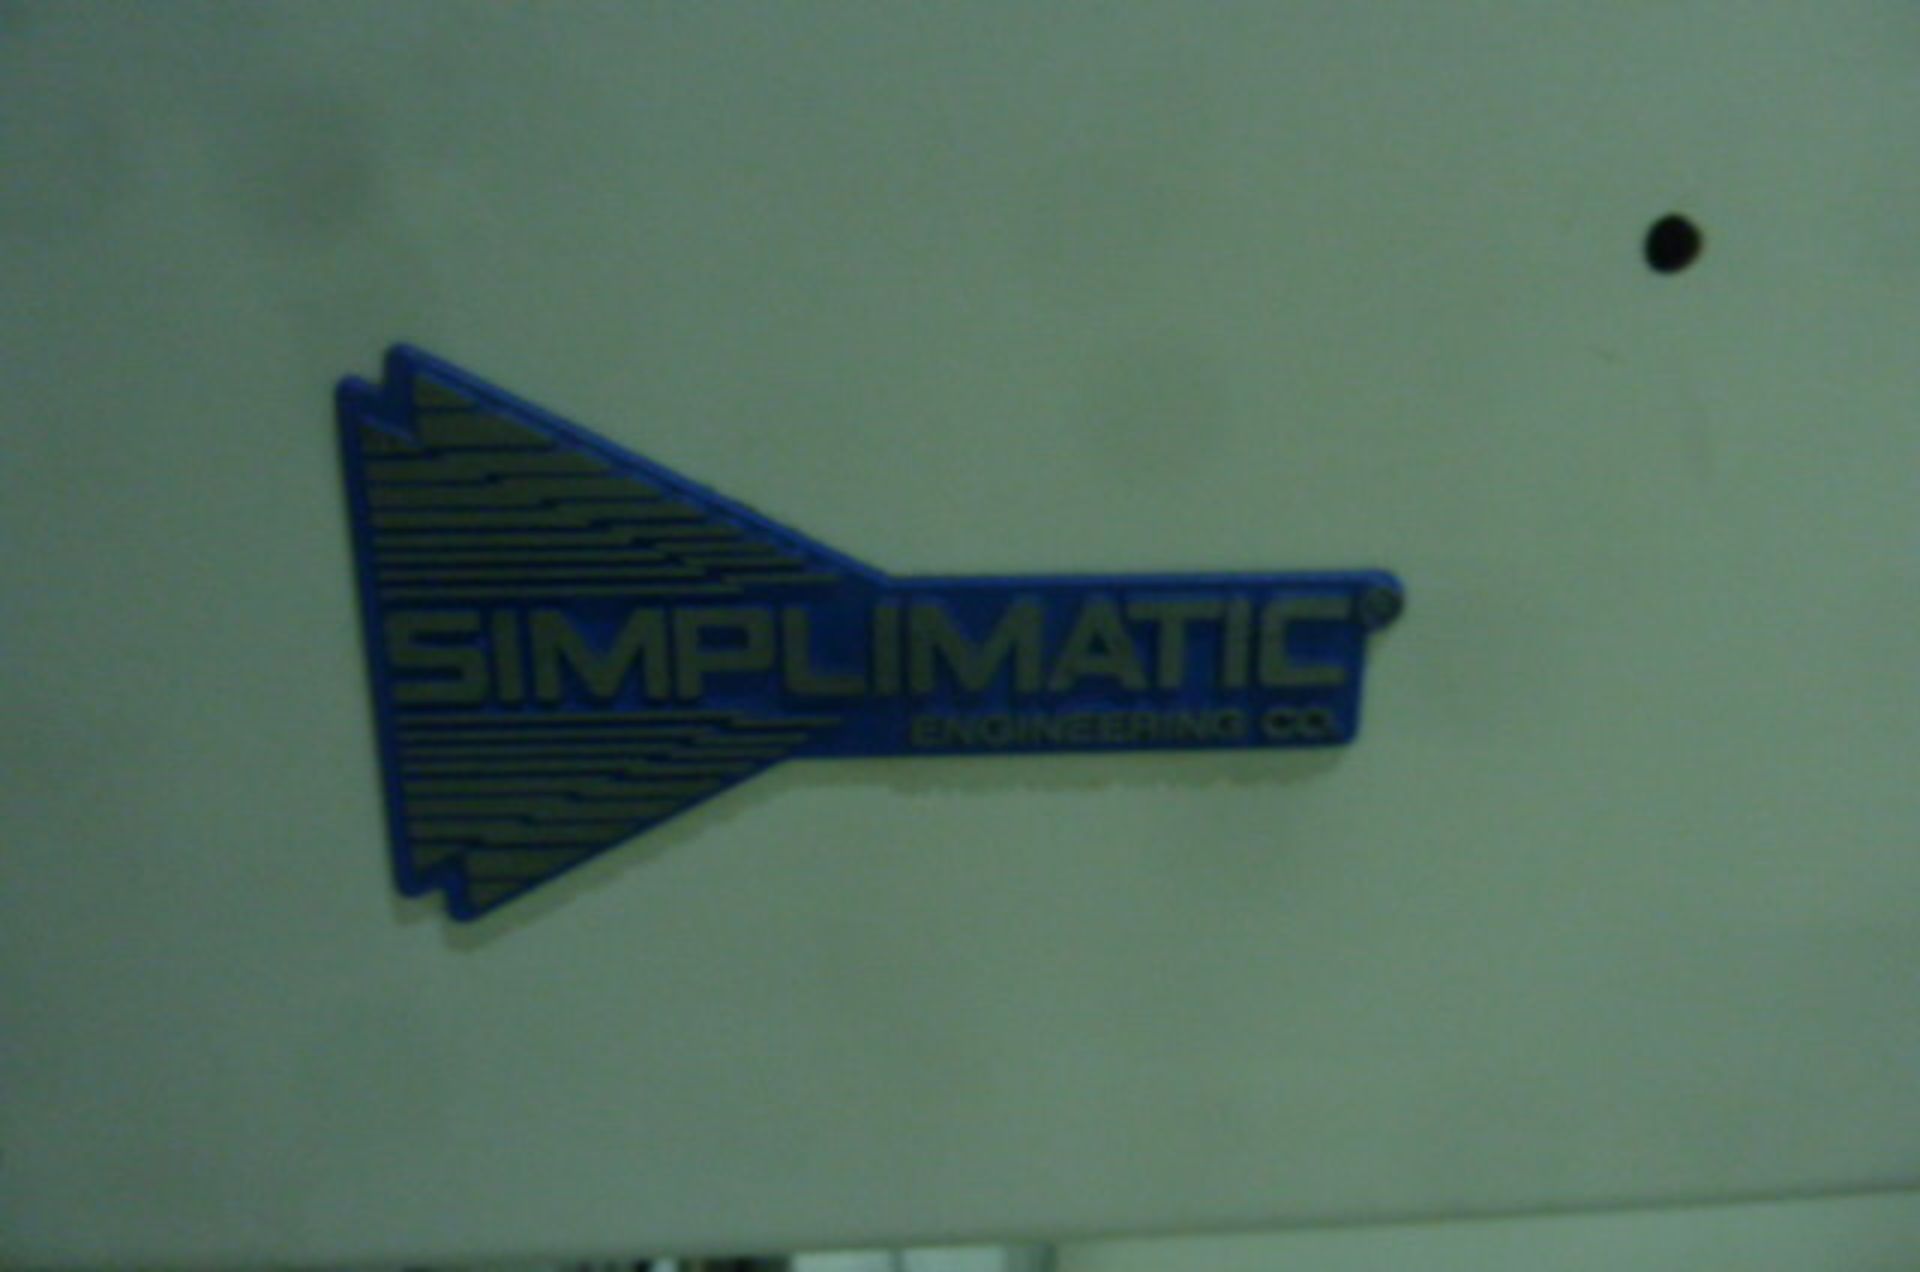 Simplimatic conveyor - Image 3 of 4